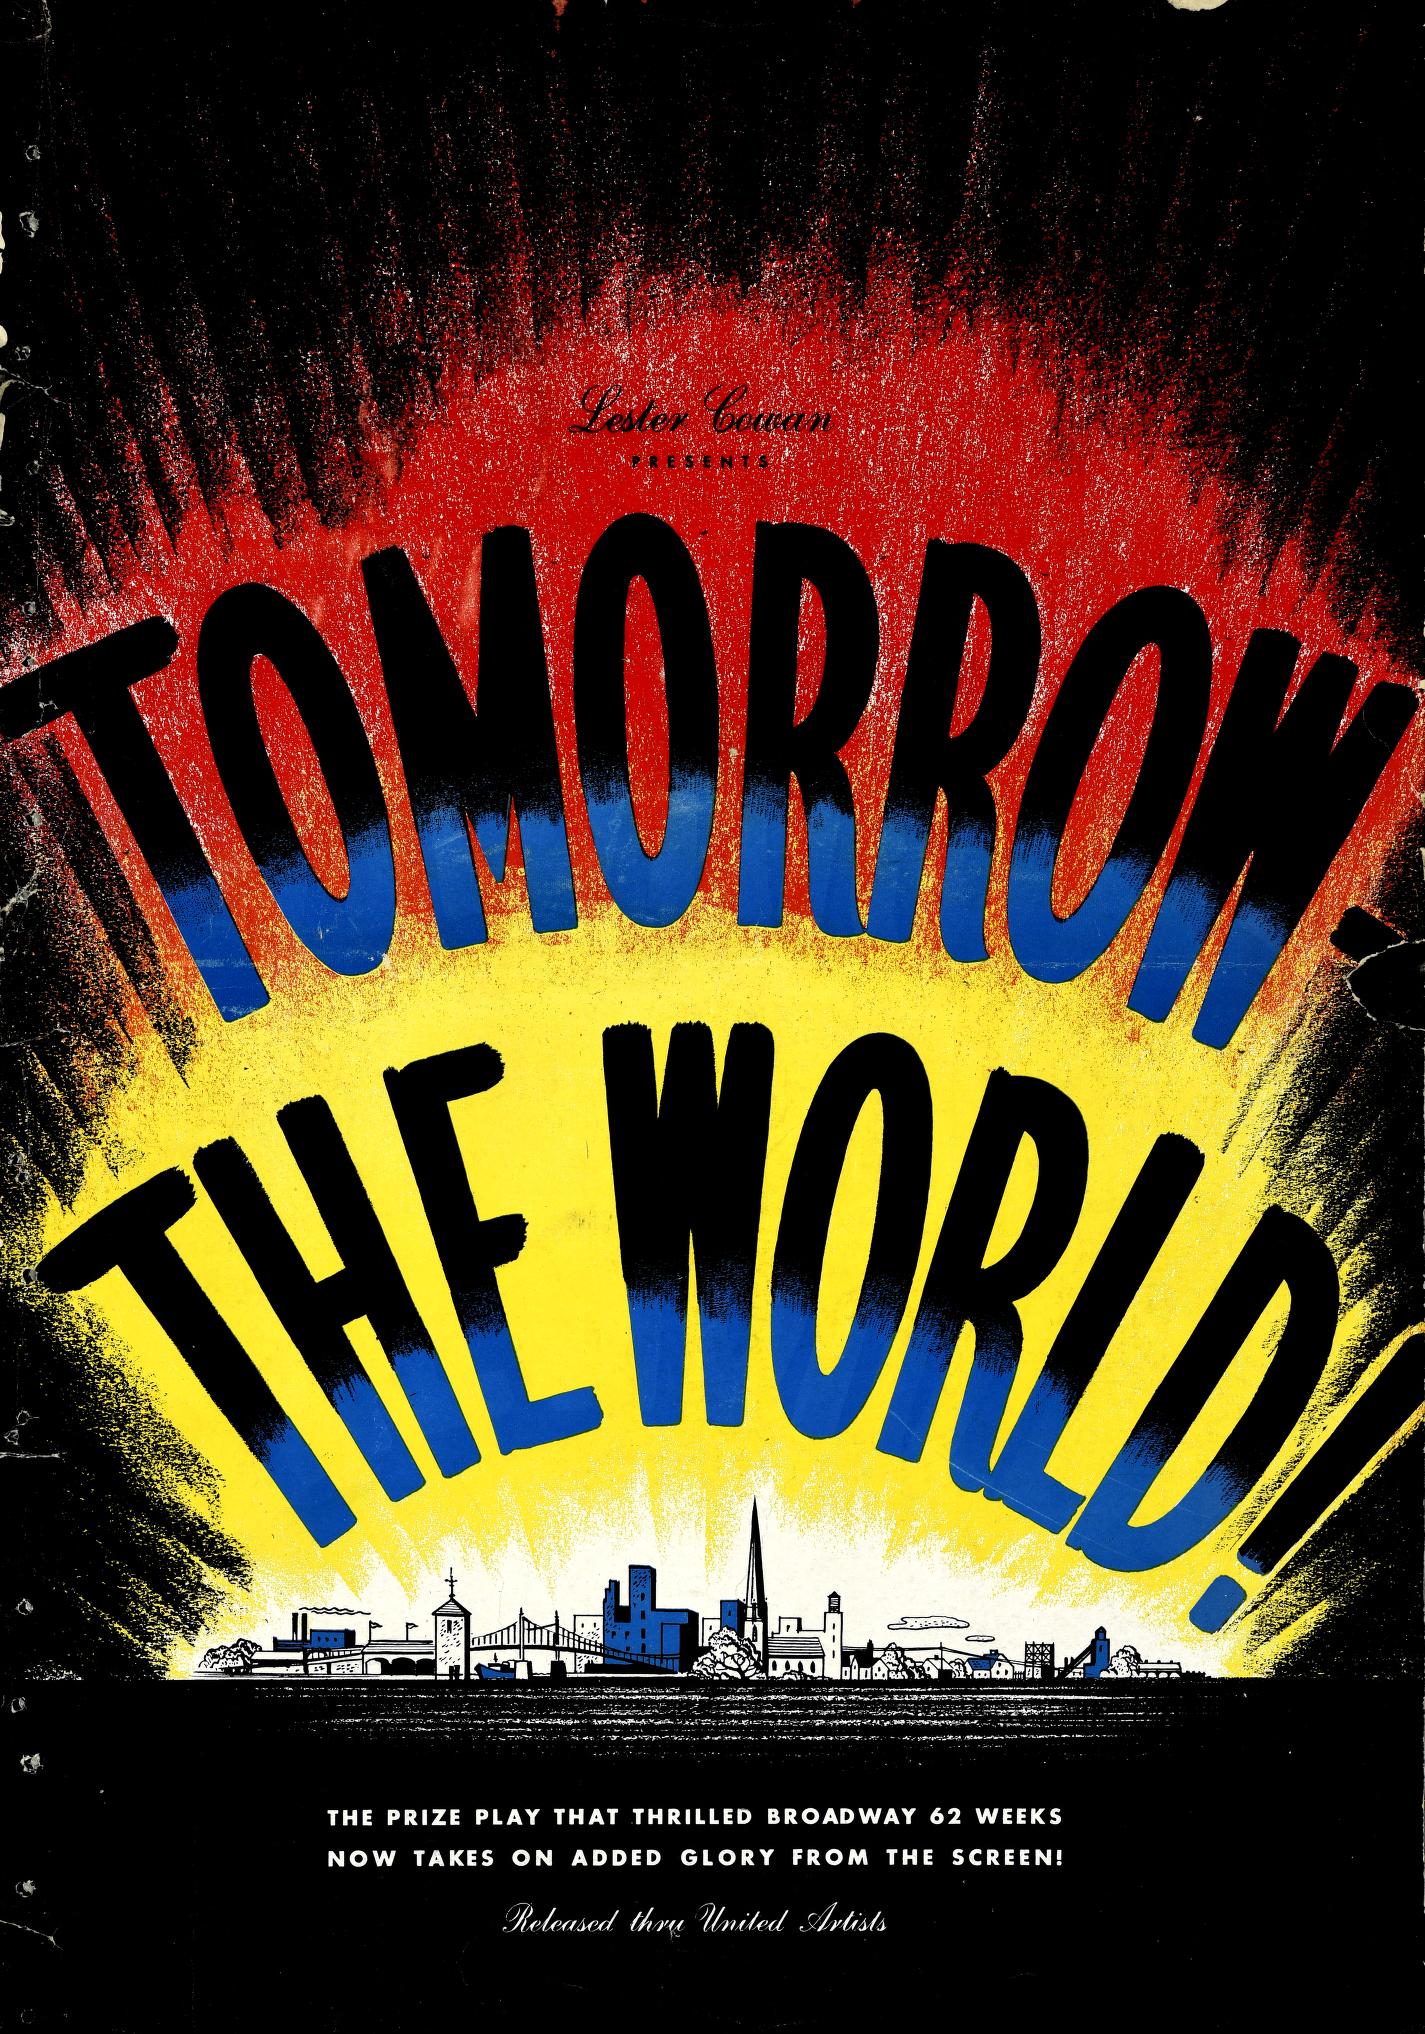 Tomorrow, the World! (United Artists)